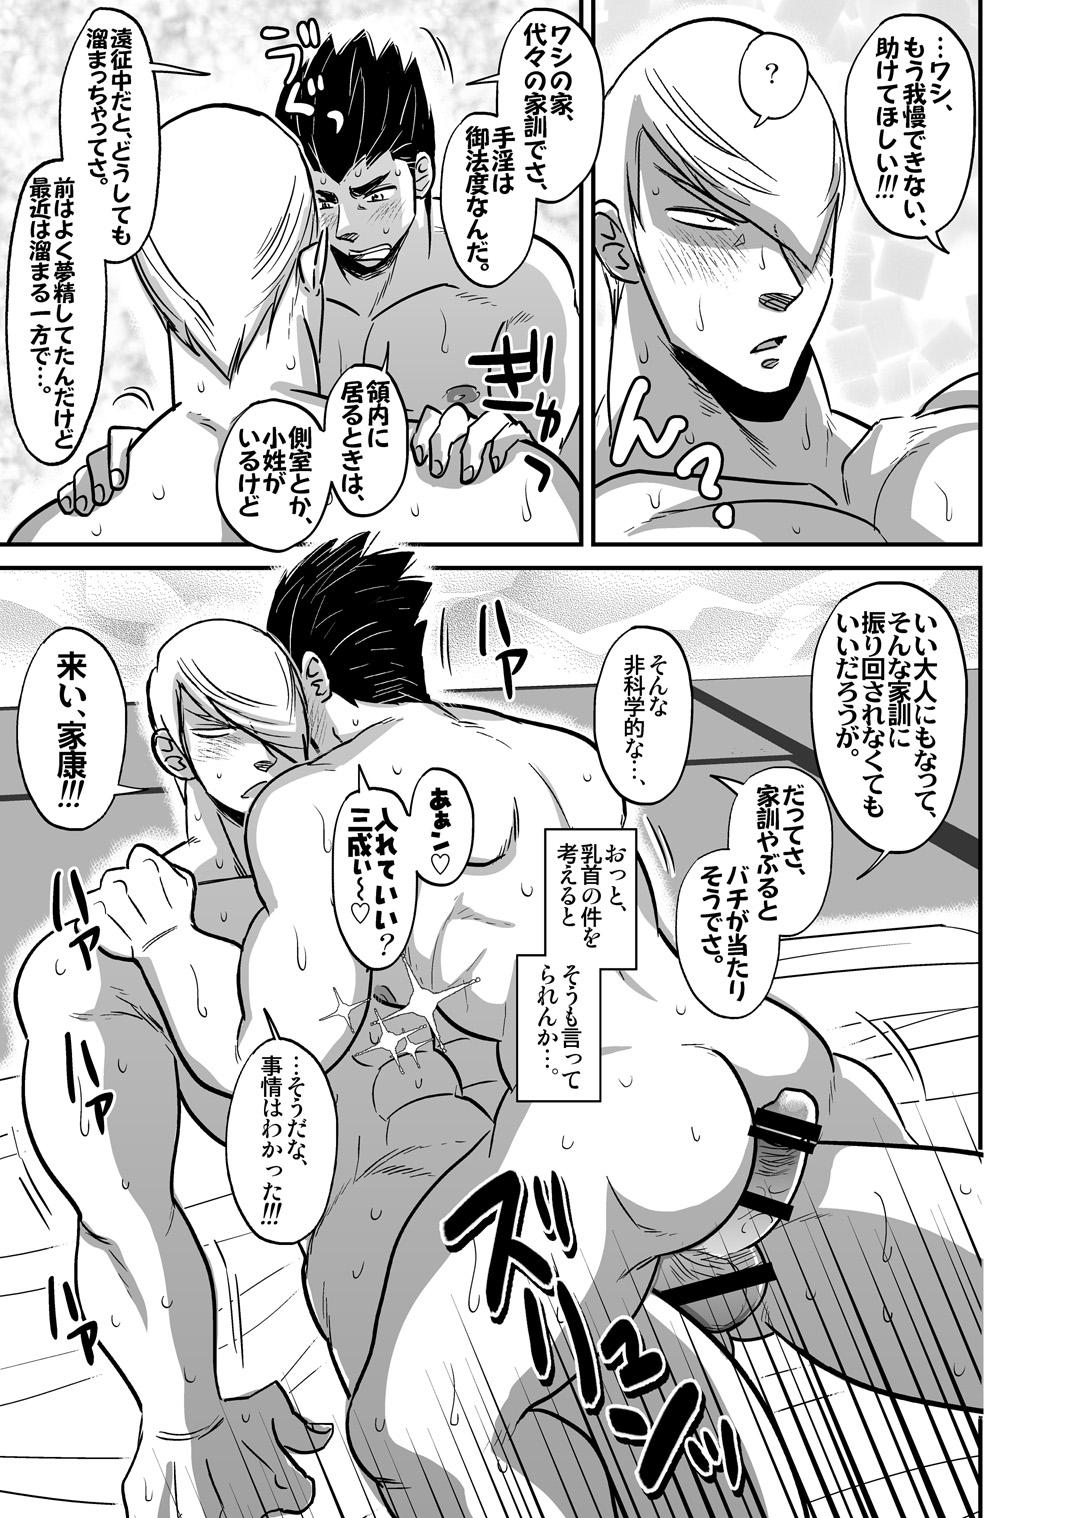 Cdmx Multi-HOMO manga at home - Sengoku basara Ssbbw - Page 10